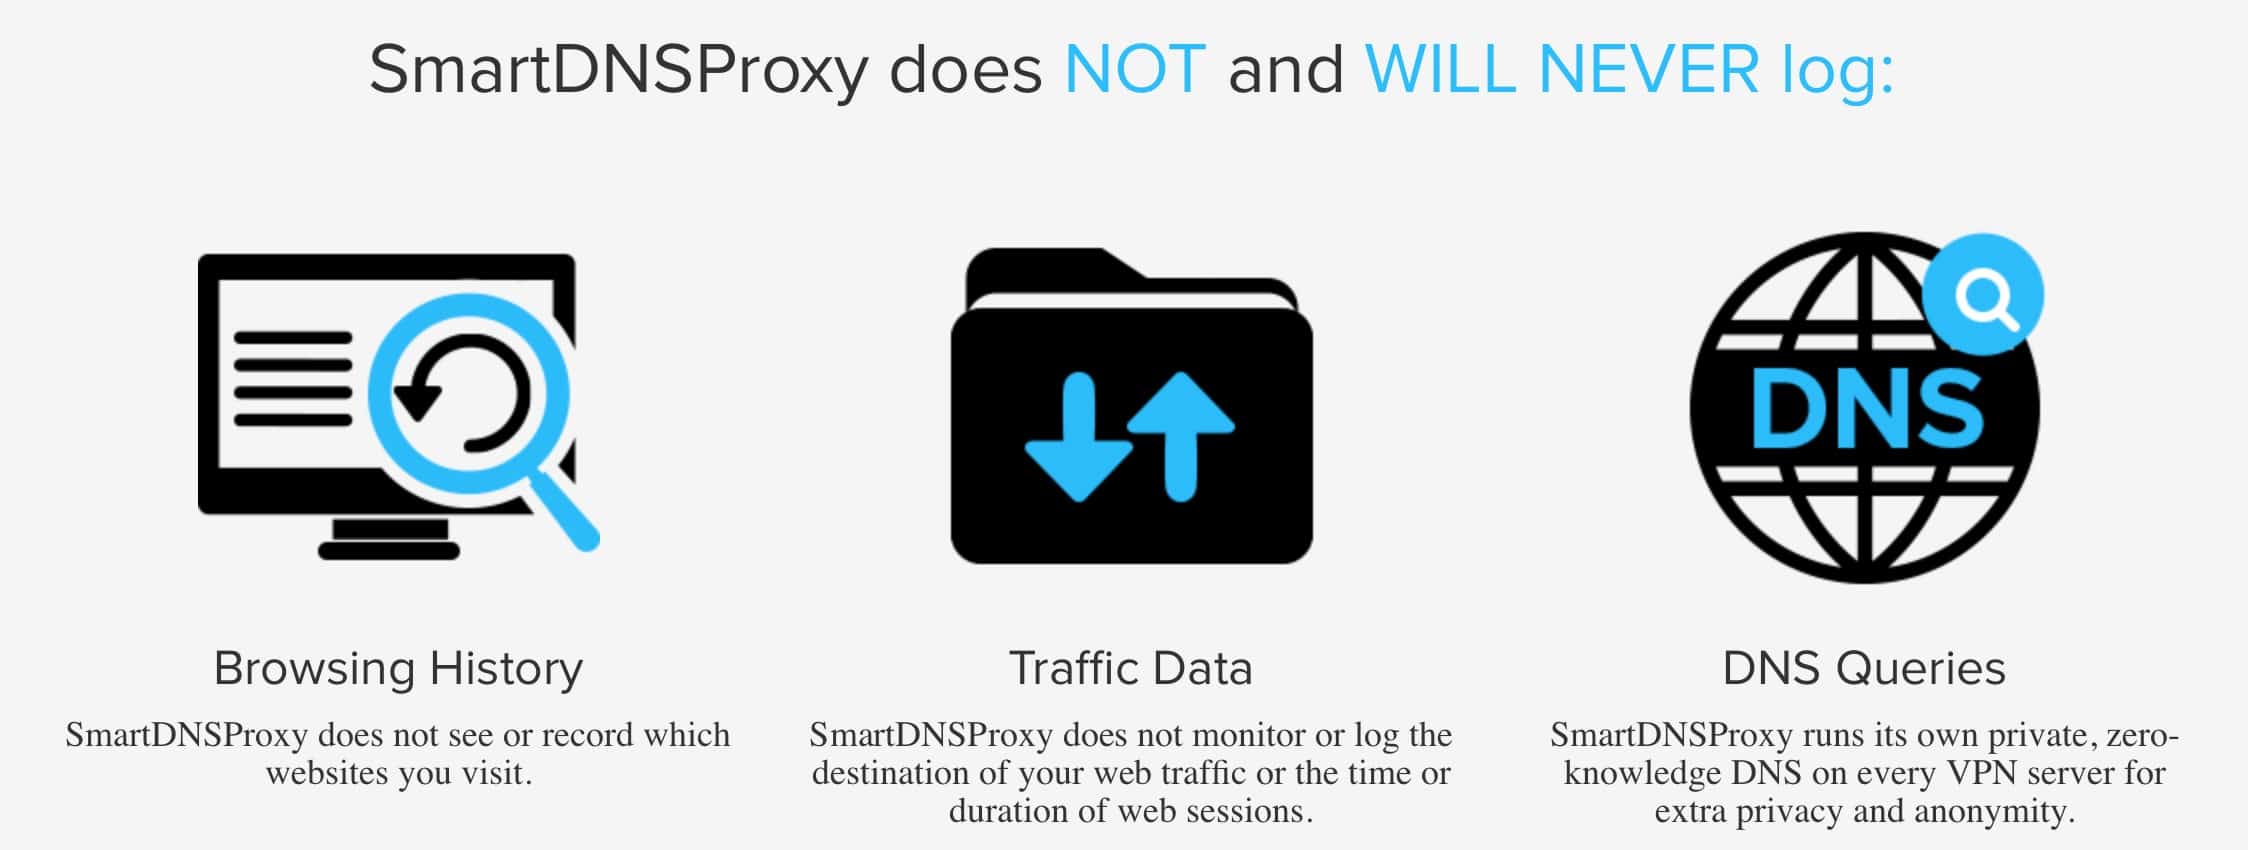 SmartDNSProxy - Privacy Policy Marketing